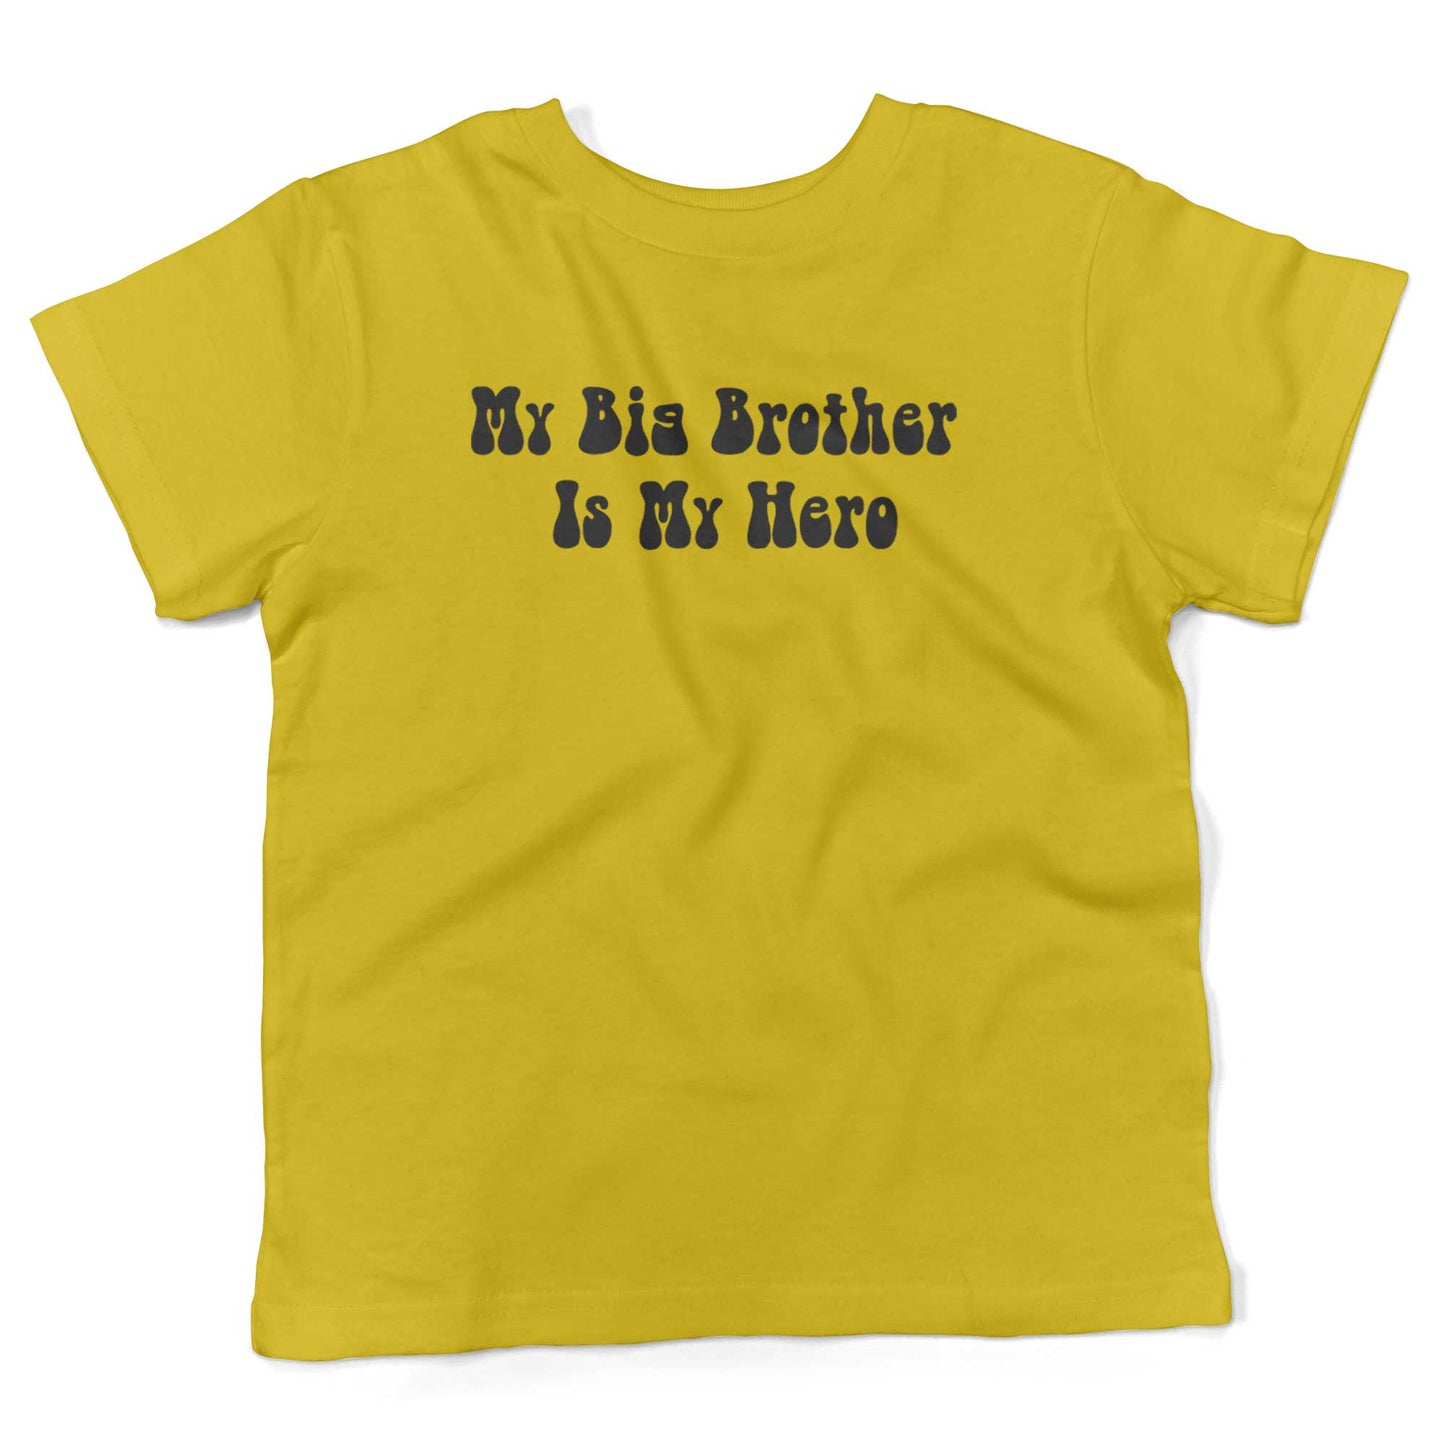 My Big Brother Is My Hero Toddler Shirt-Sunshine Yellow-2T